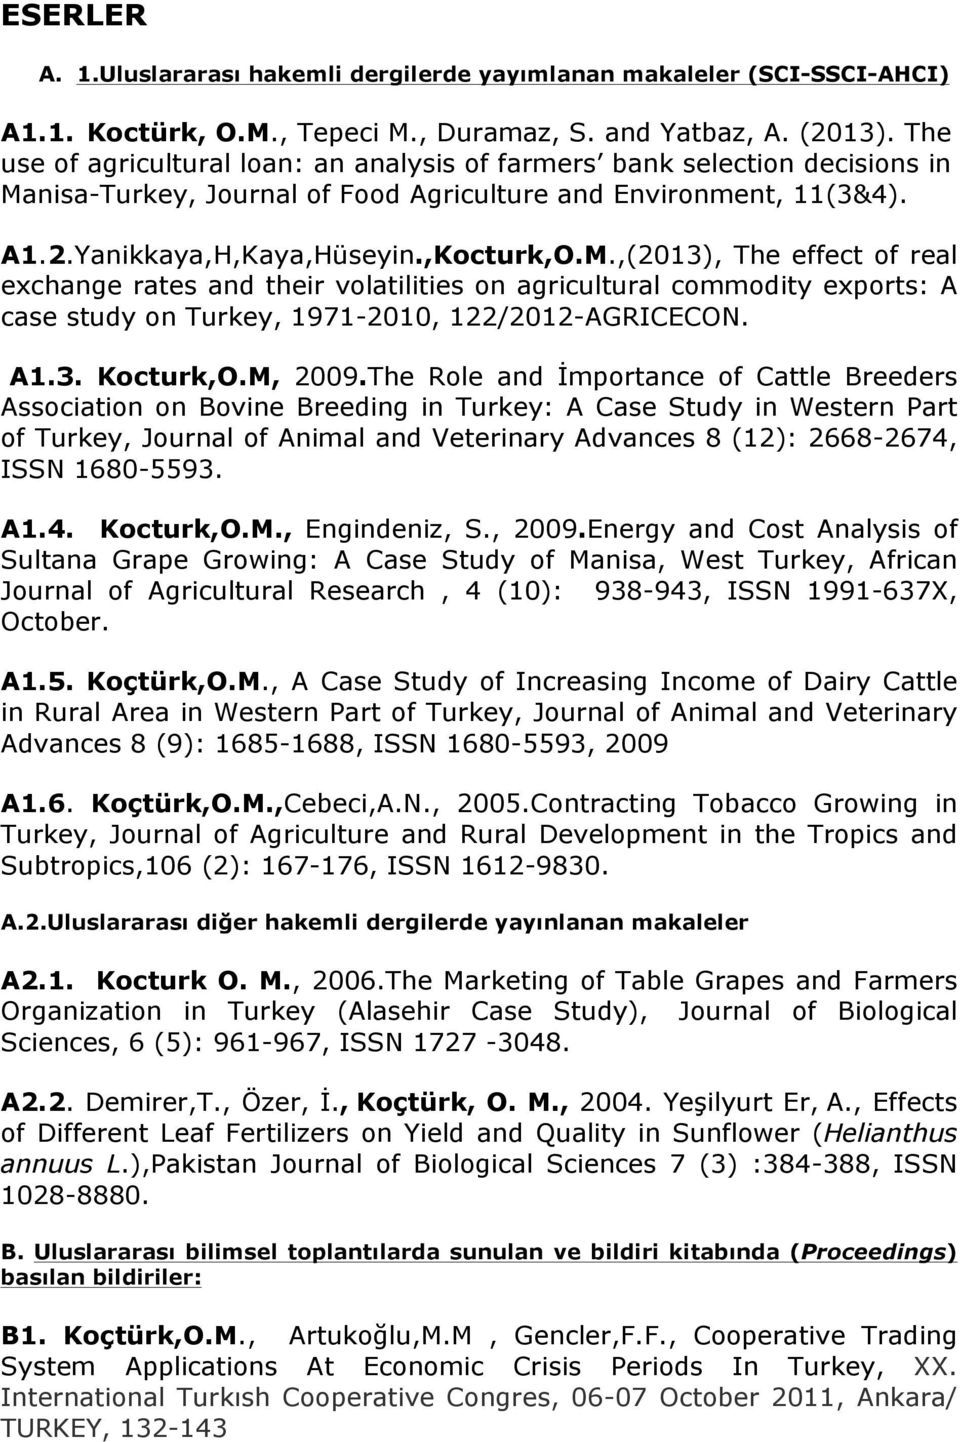 nisa-Turkey, Journal of Food Agriculture and Environment, 11(3&4). A1.2.Yanikkaya,H,Kaya,Hüseyin.,Kocturk,O.M.